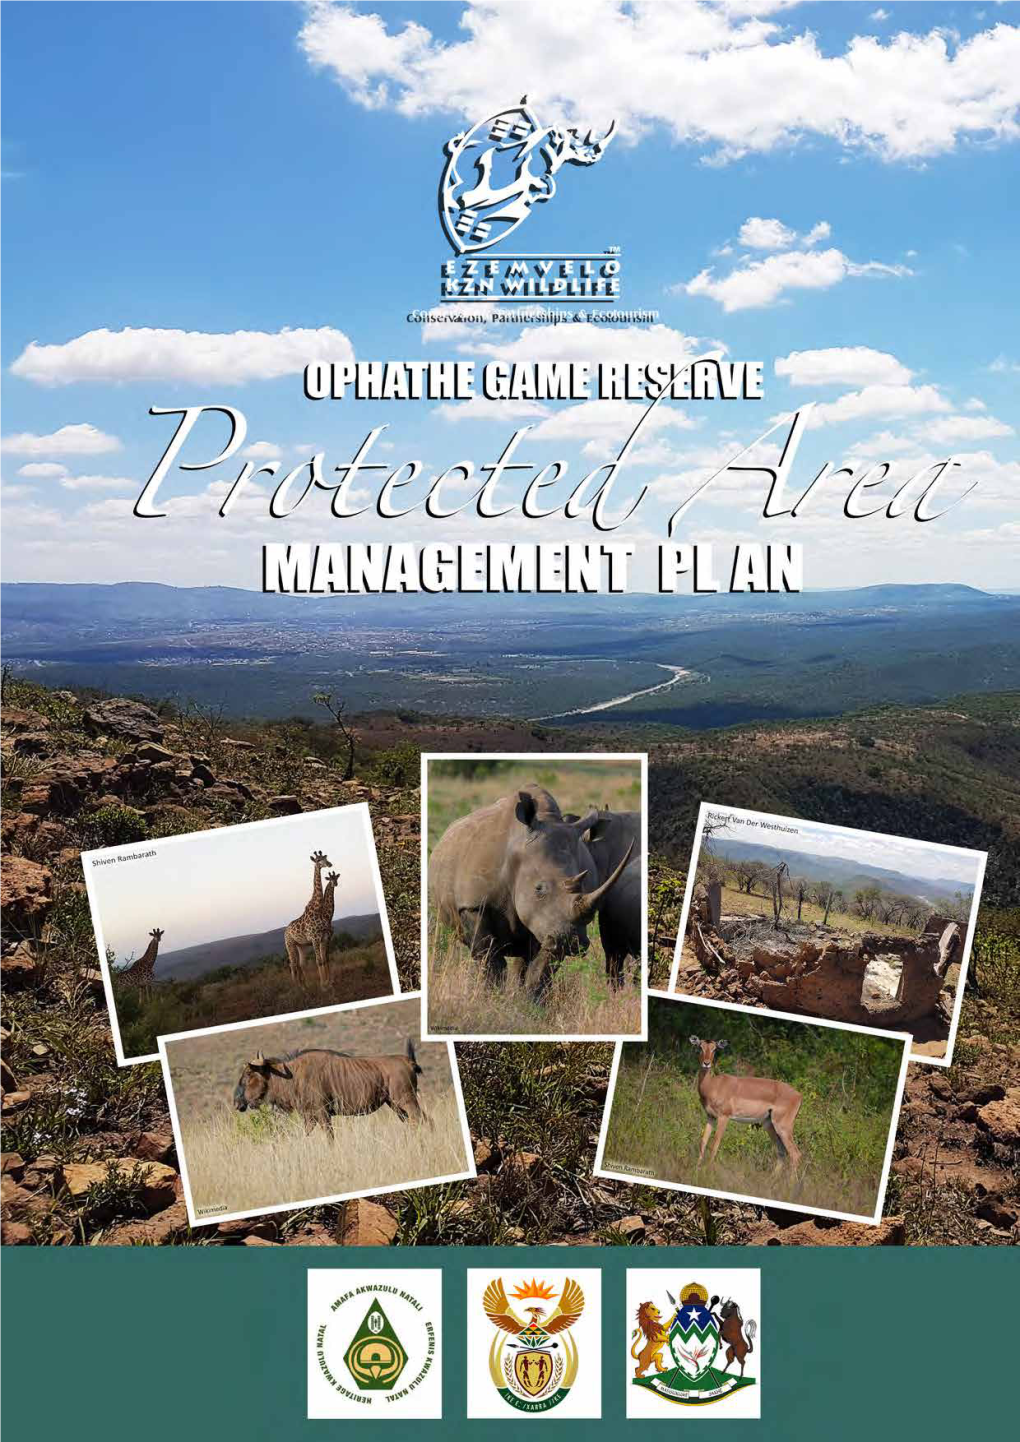 game reserve business plan pdf